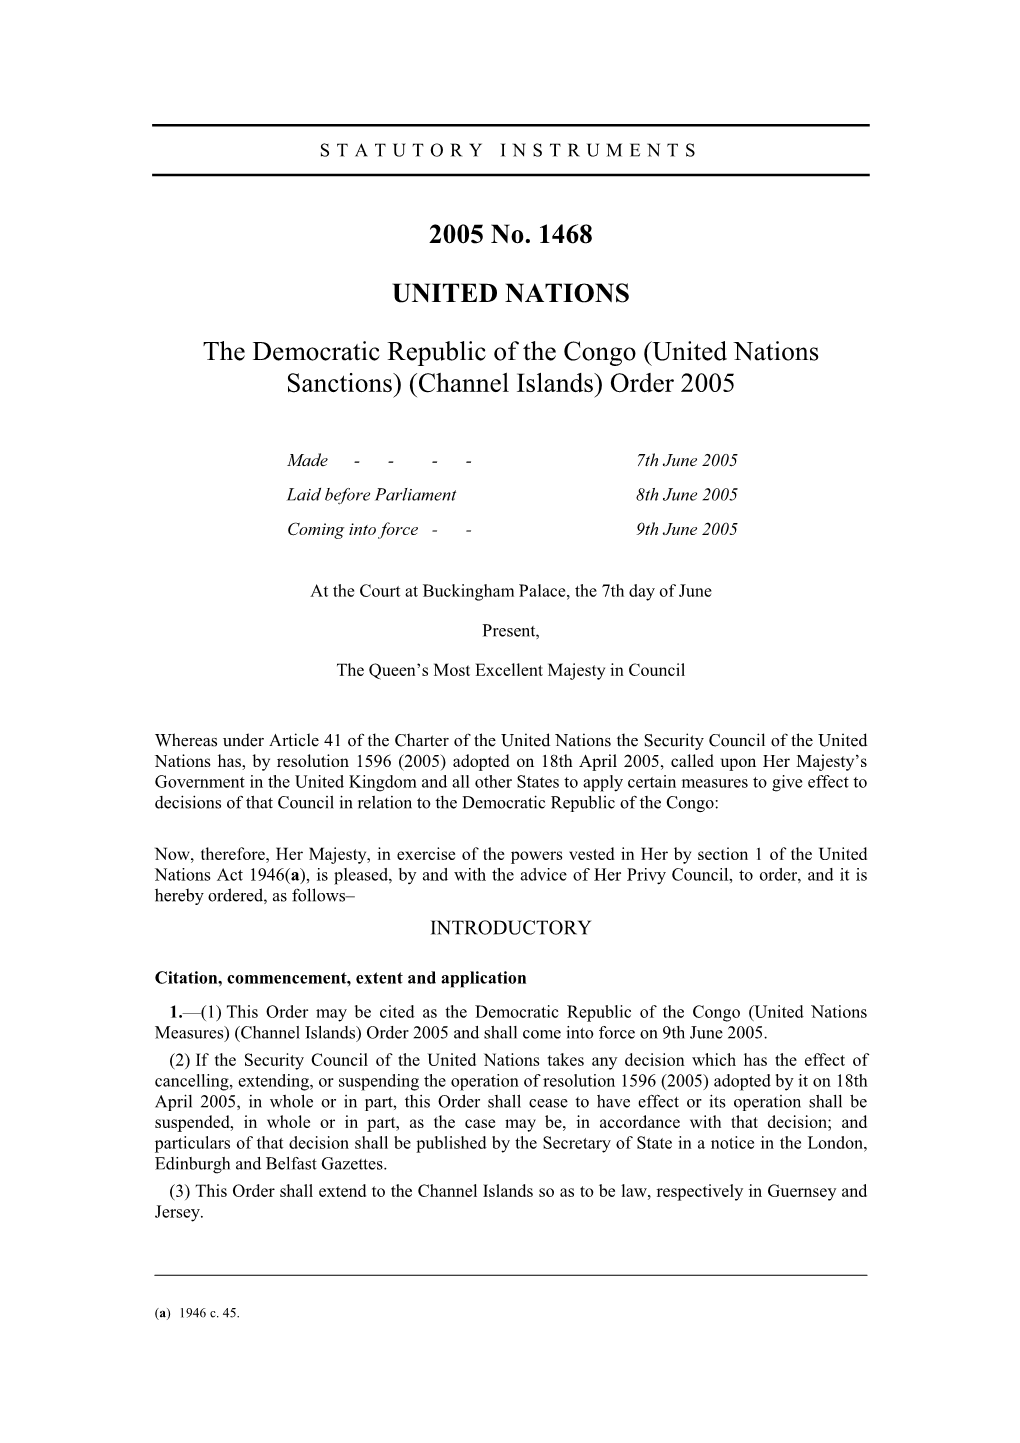 2005 No. 1468 UNITED NATIONS the Democratic Republic of the Congo